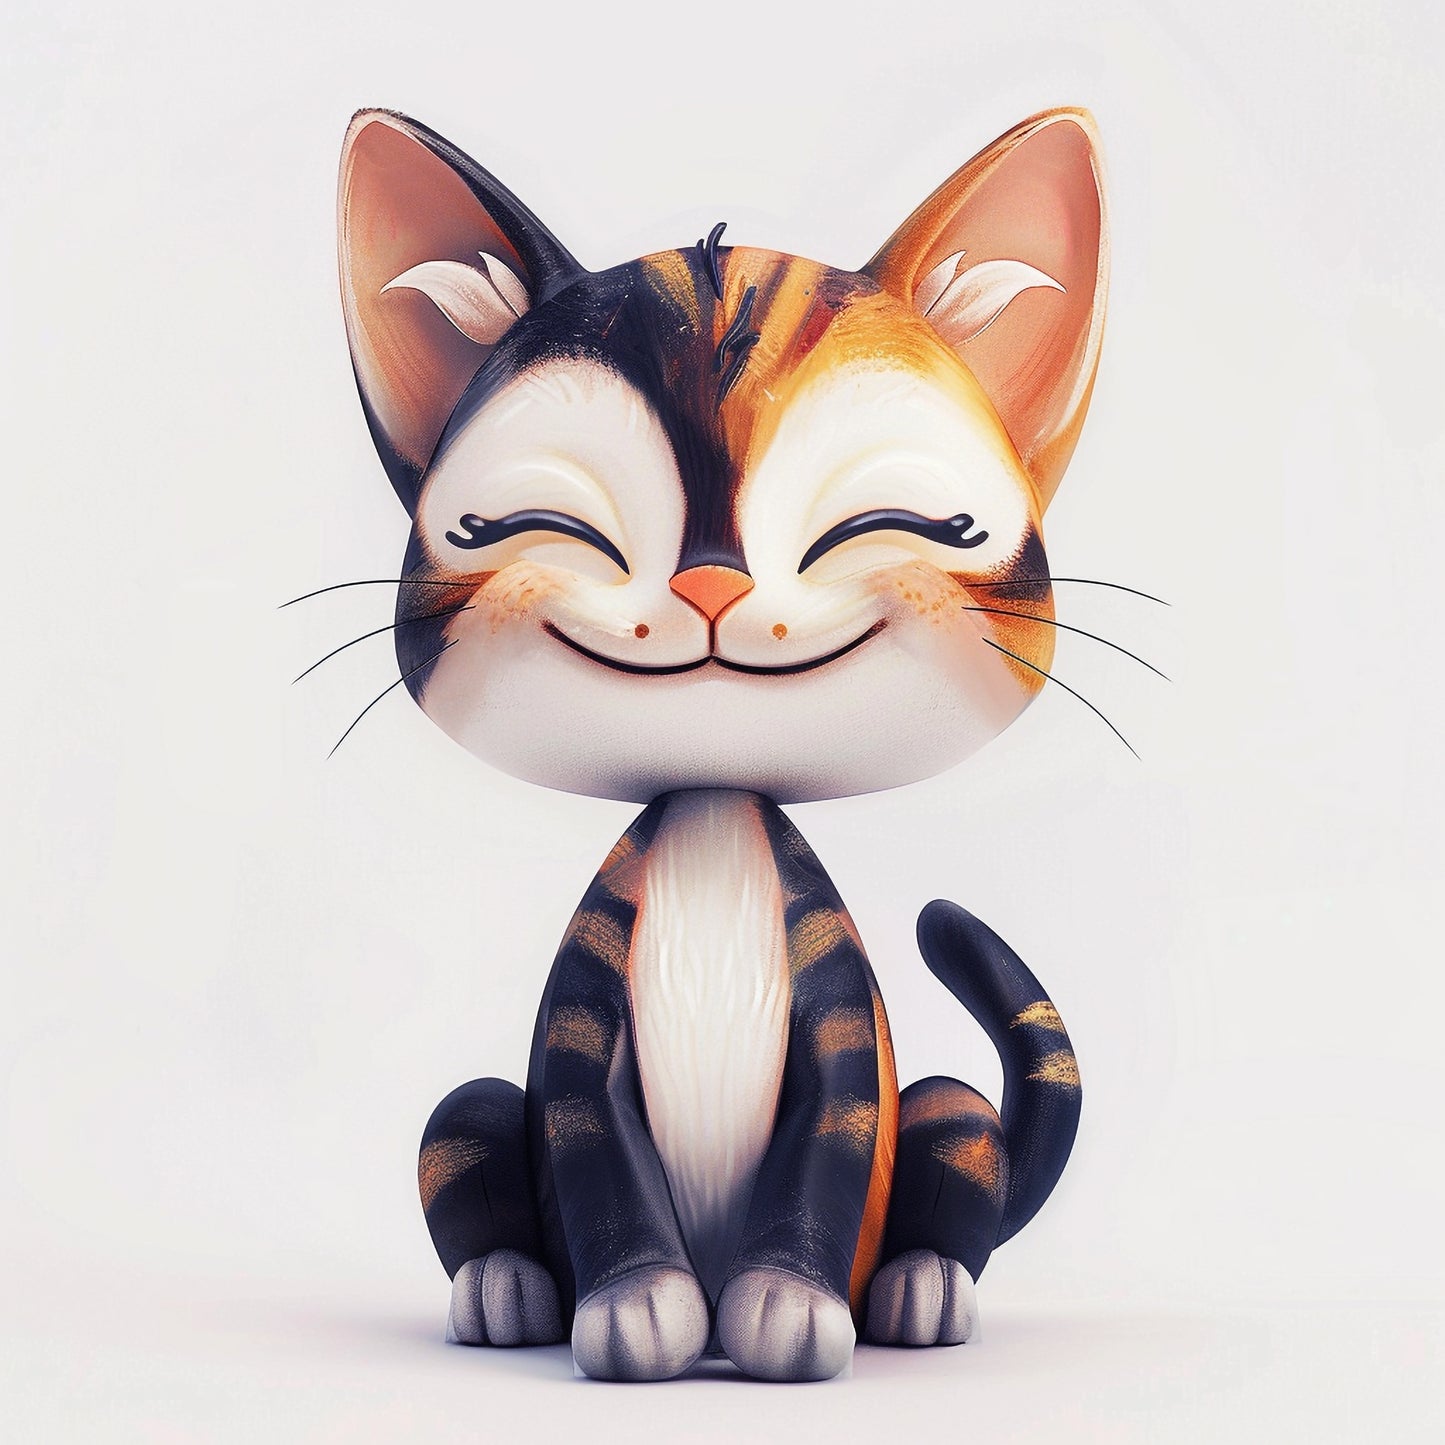 Adorable Award-Winning Illustration of a Happy Cat